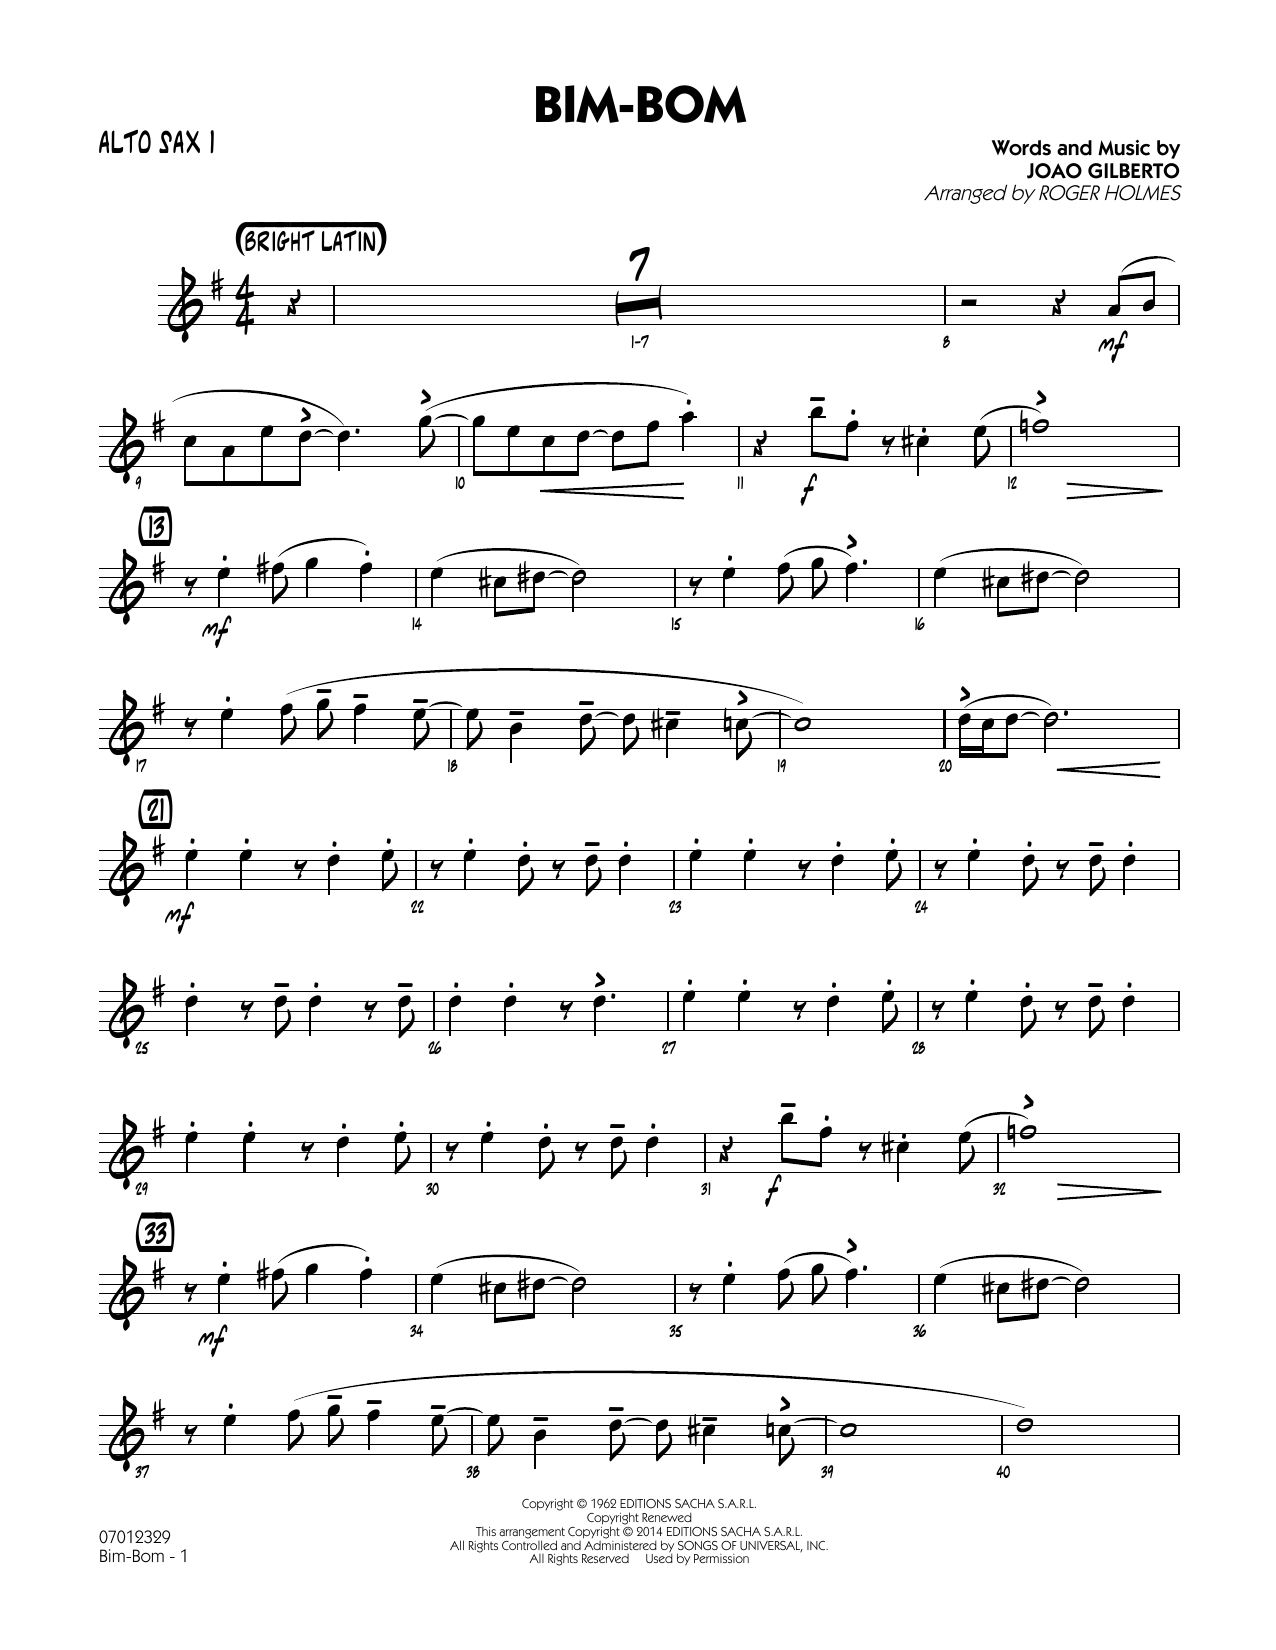 Roger Holmes Bim-Bom - Alto Sax 1 sheet music notes and chords. Download Printable PDF.